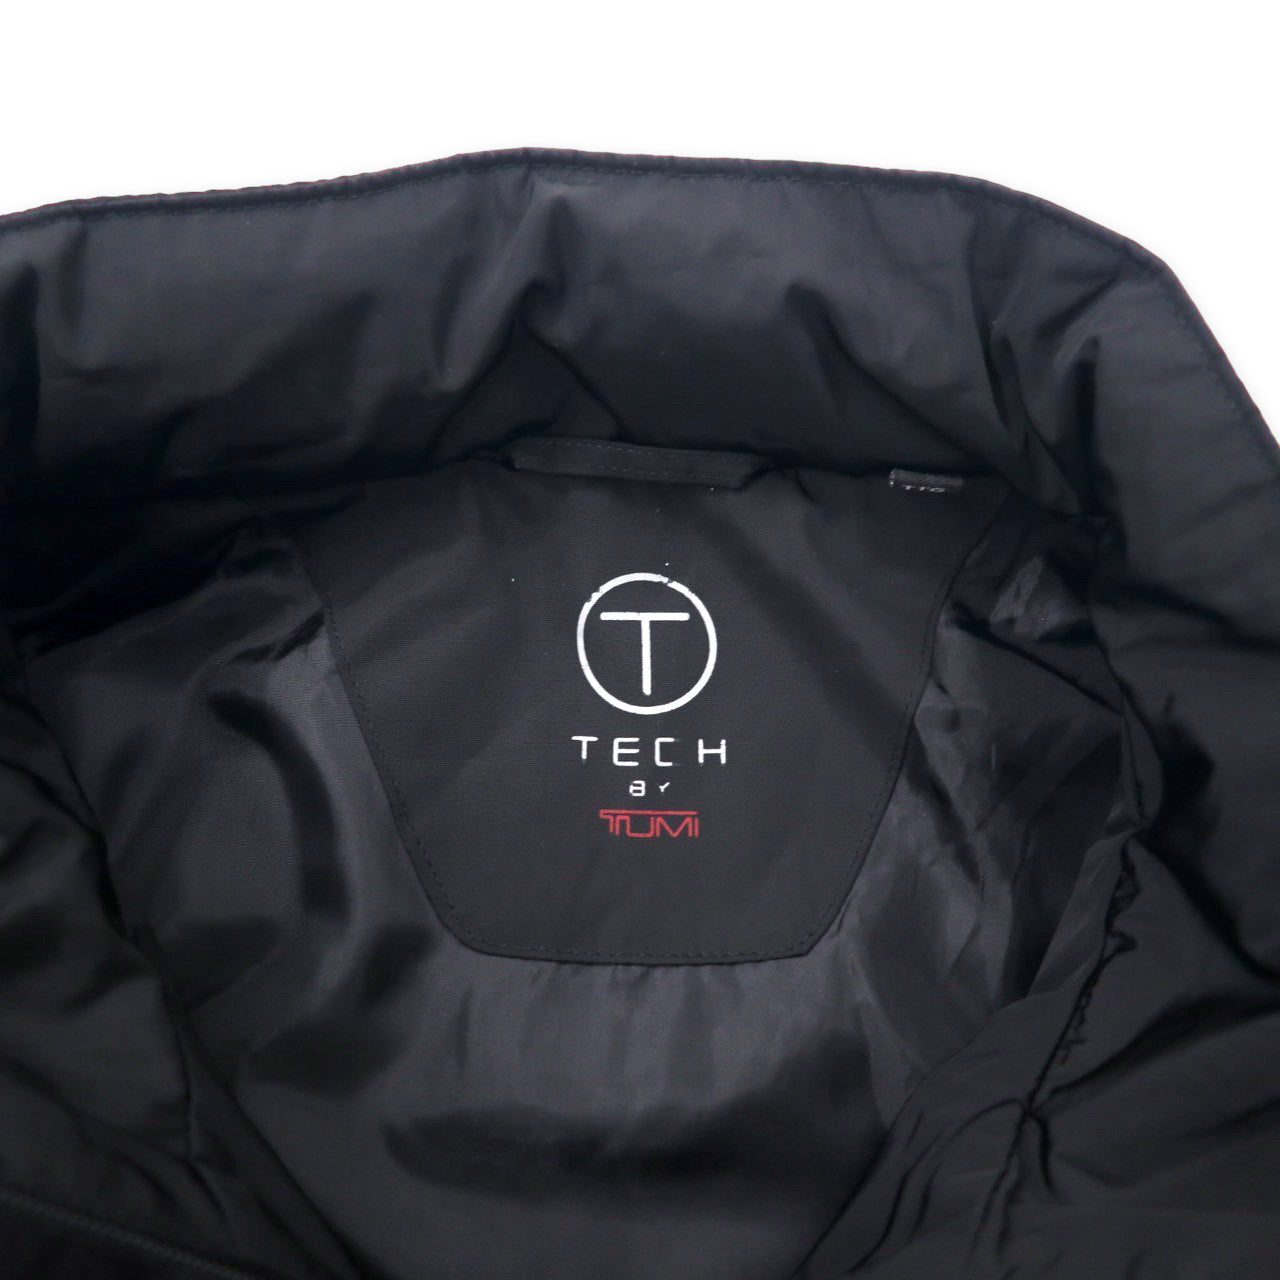 T-Tech by TUMI シェルジャケット 2XL ブラック ポリエステル 軽量撥水 止水ジップ フード収納式 5T-2002PM